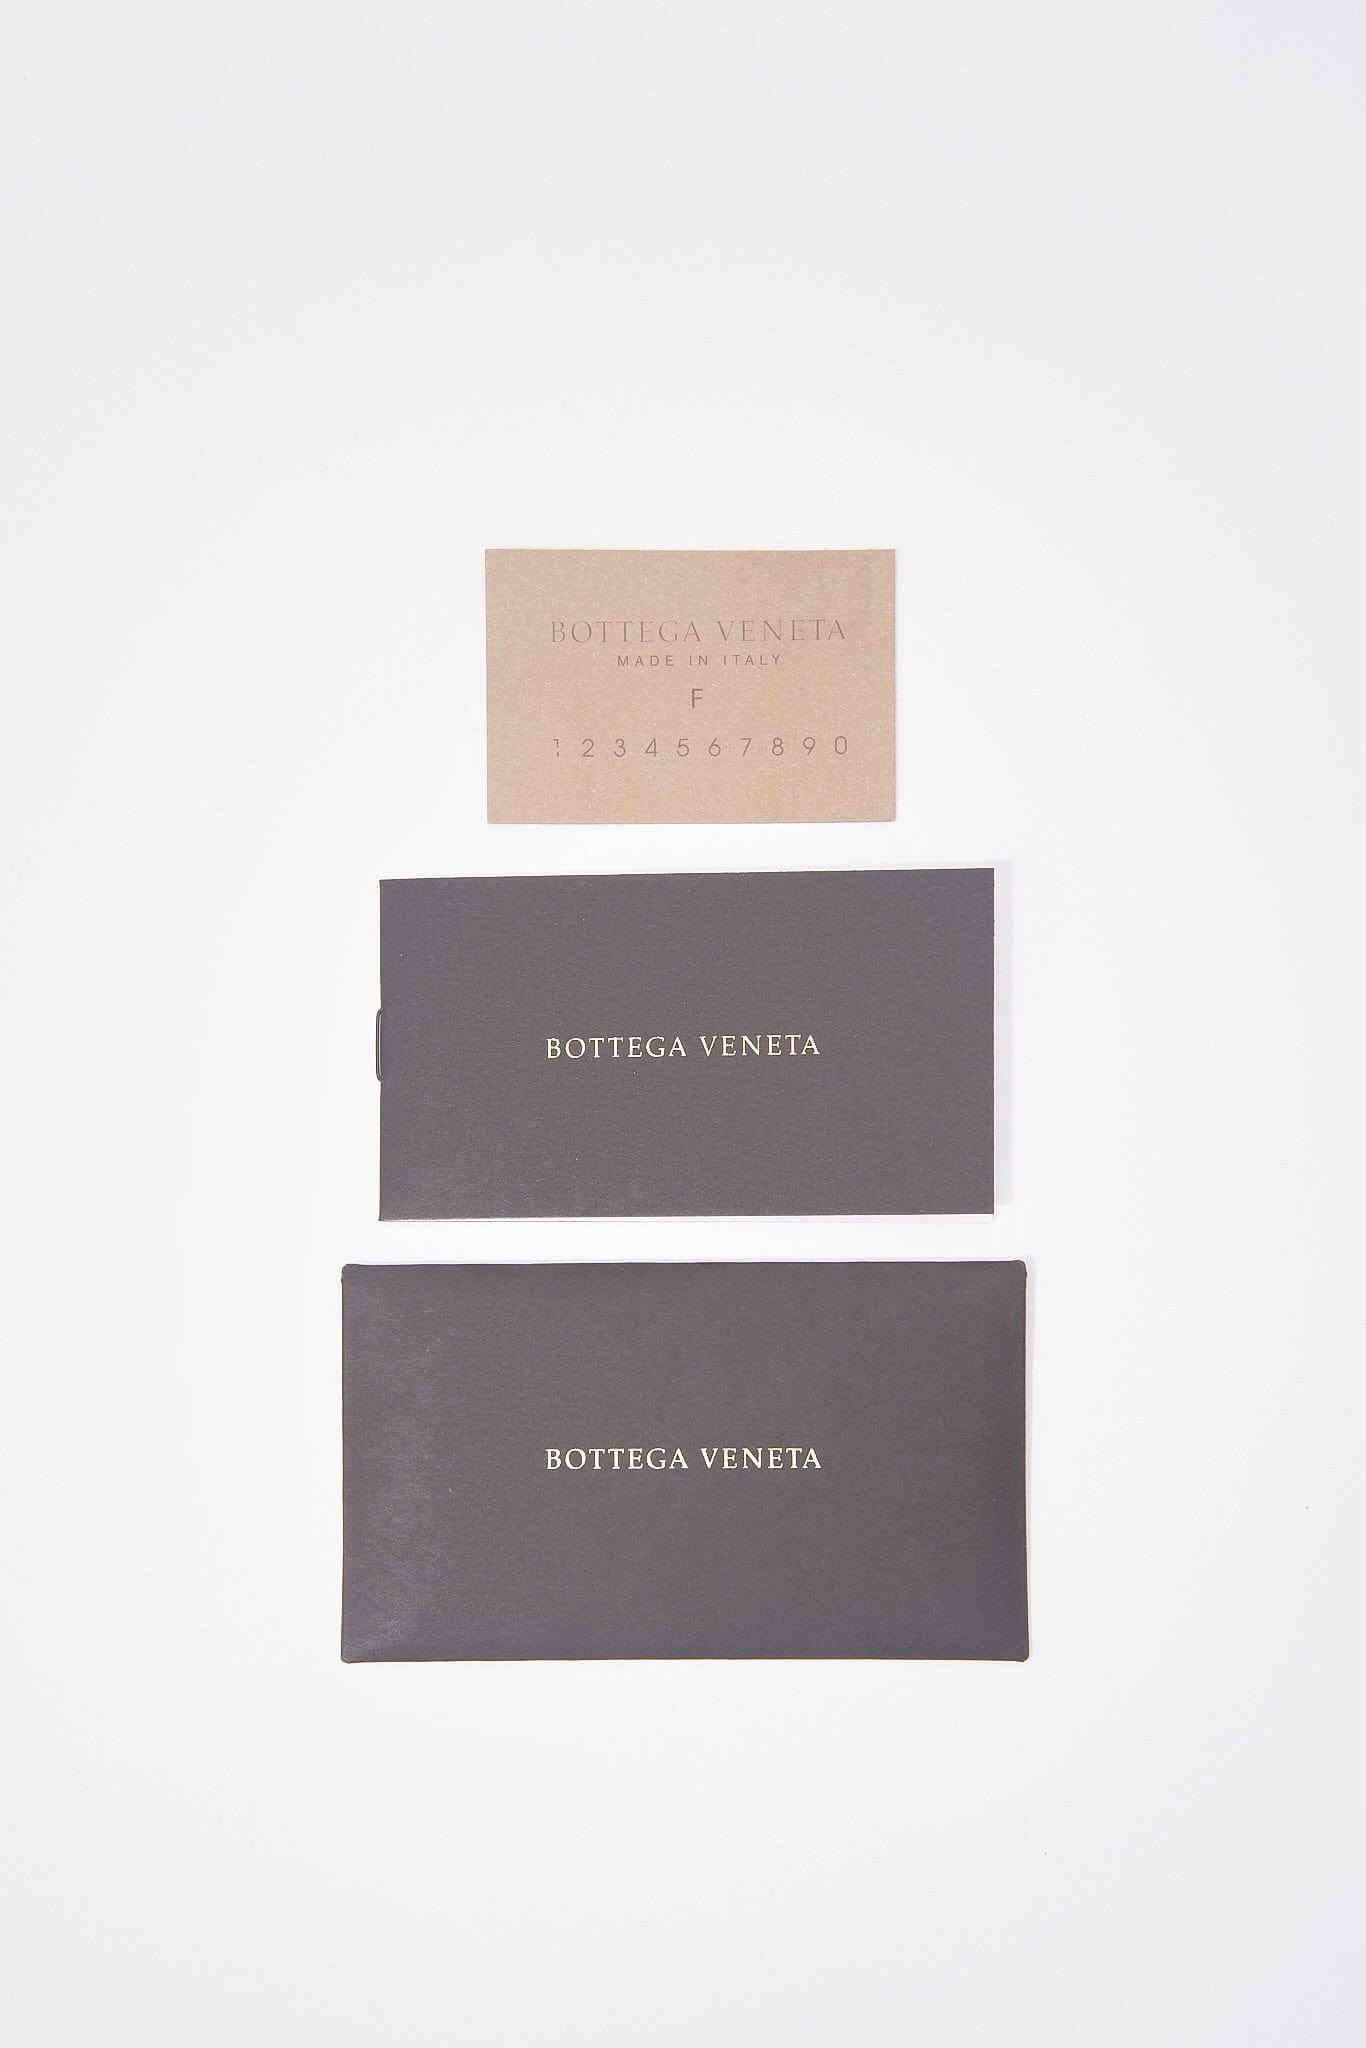 Vintage Bottega Veneta Burgundy Intrecciato Leather Tote Shoulder Bag